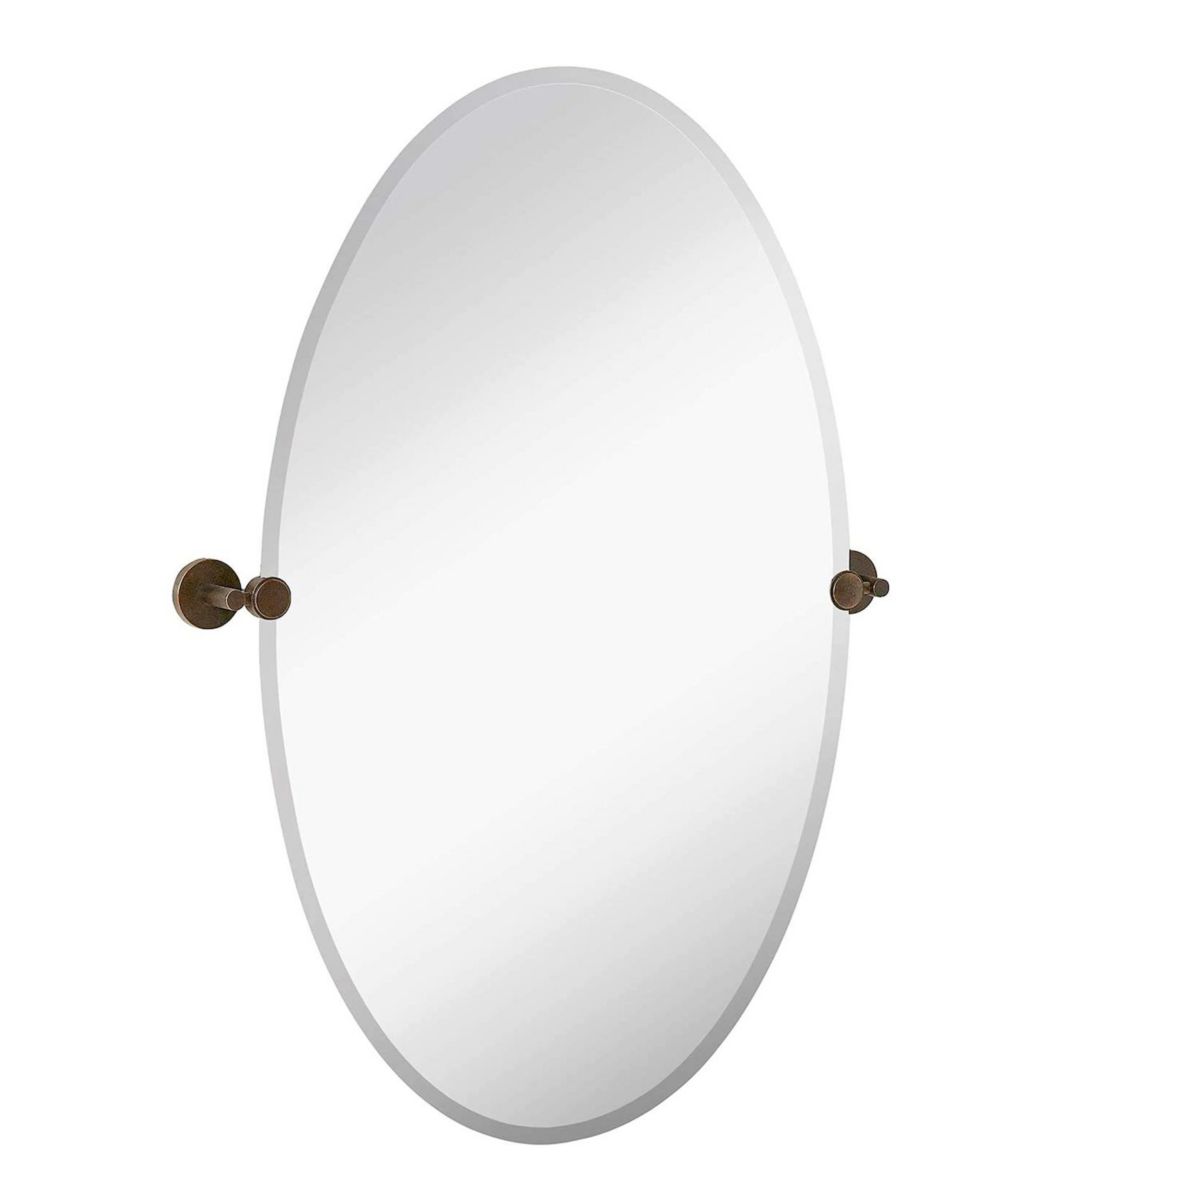 Frameless Oval Pivot Wall Mirror With Rounded Wall Brackets Circular Tilt Razor Shopping